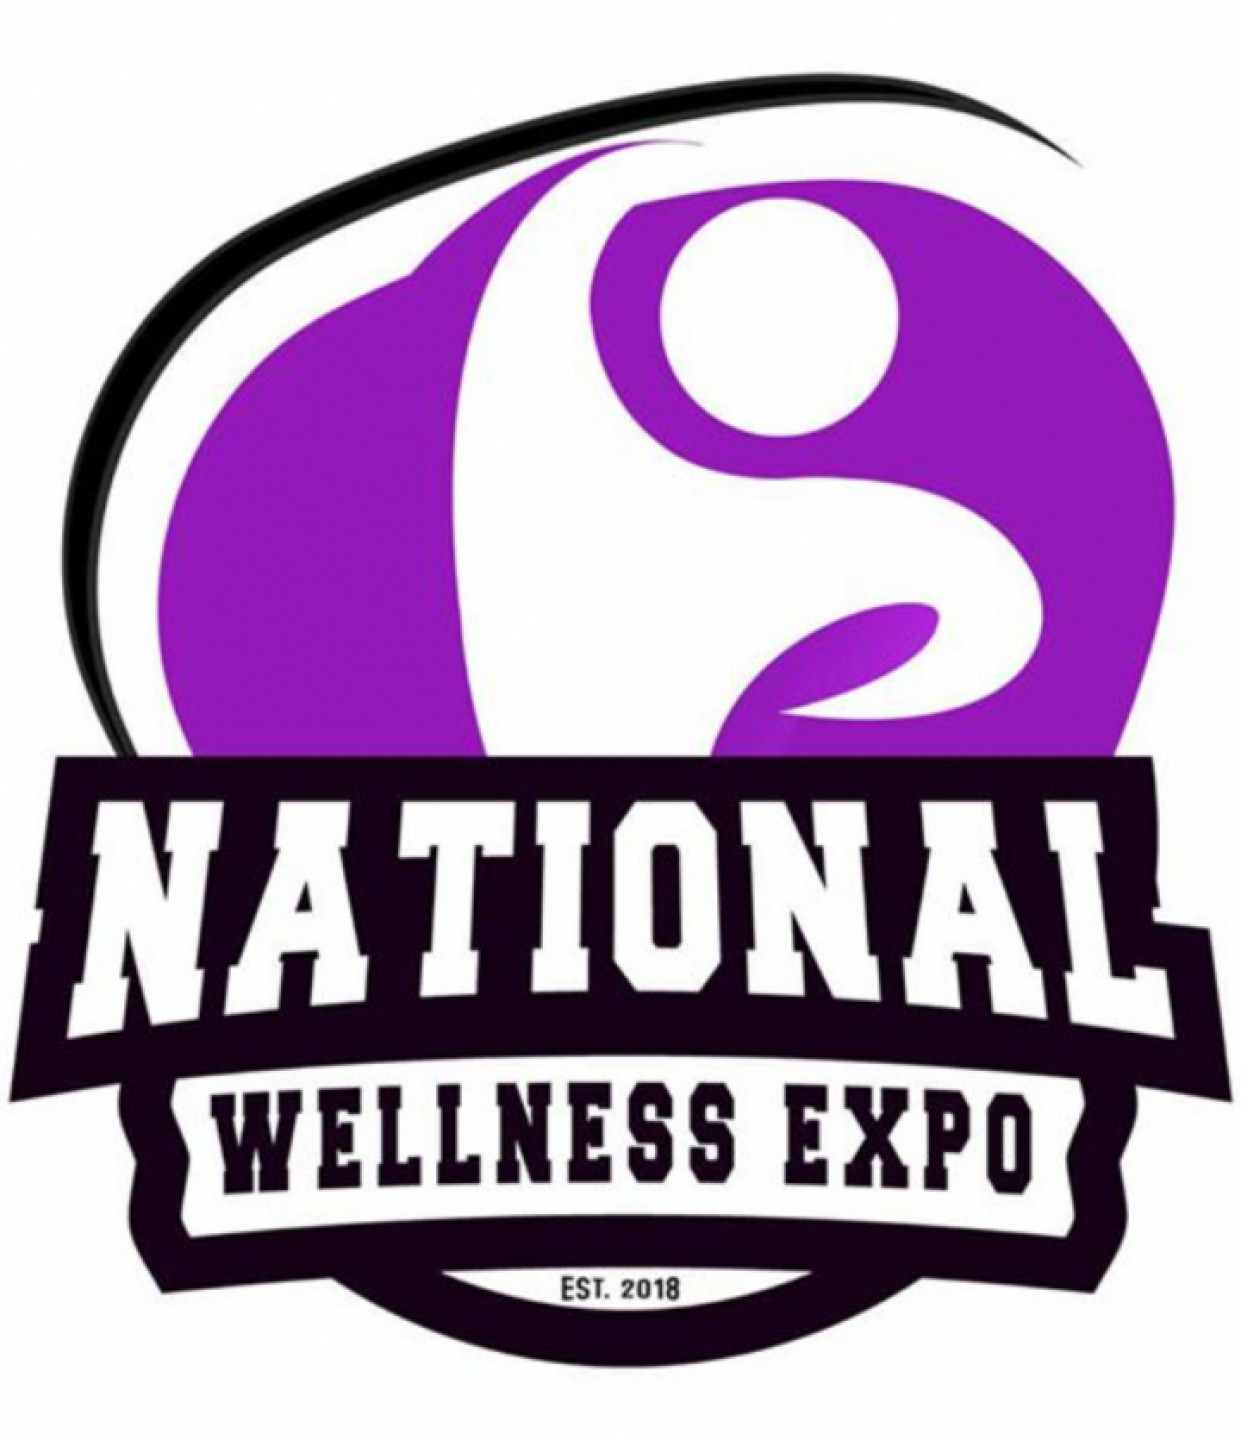 National Wellness Expo 2019